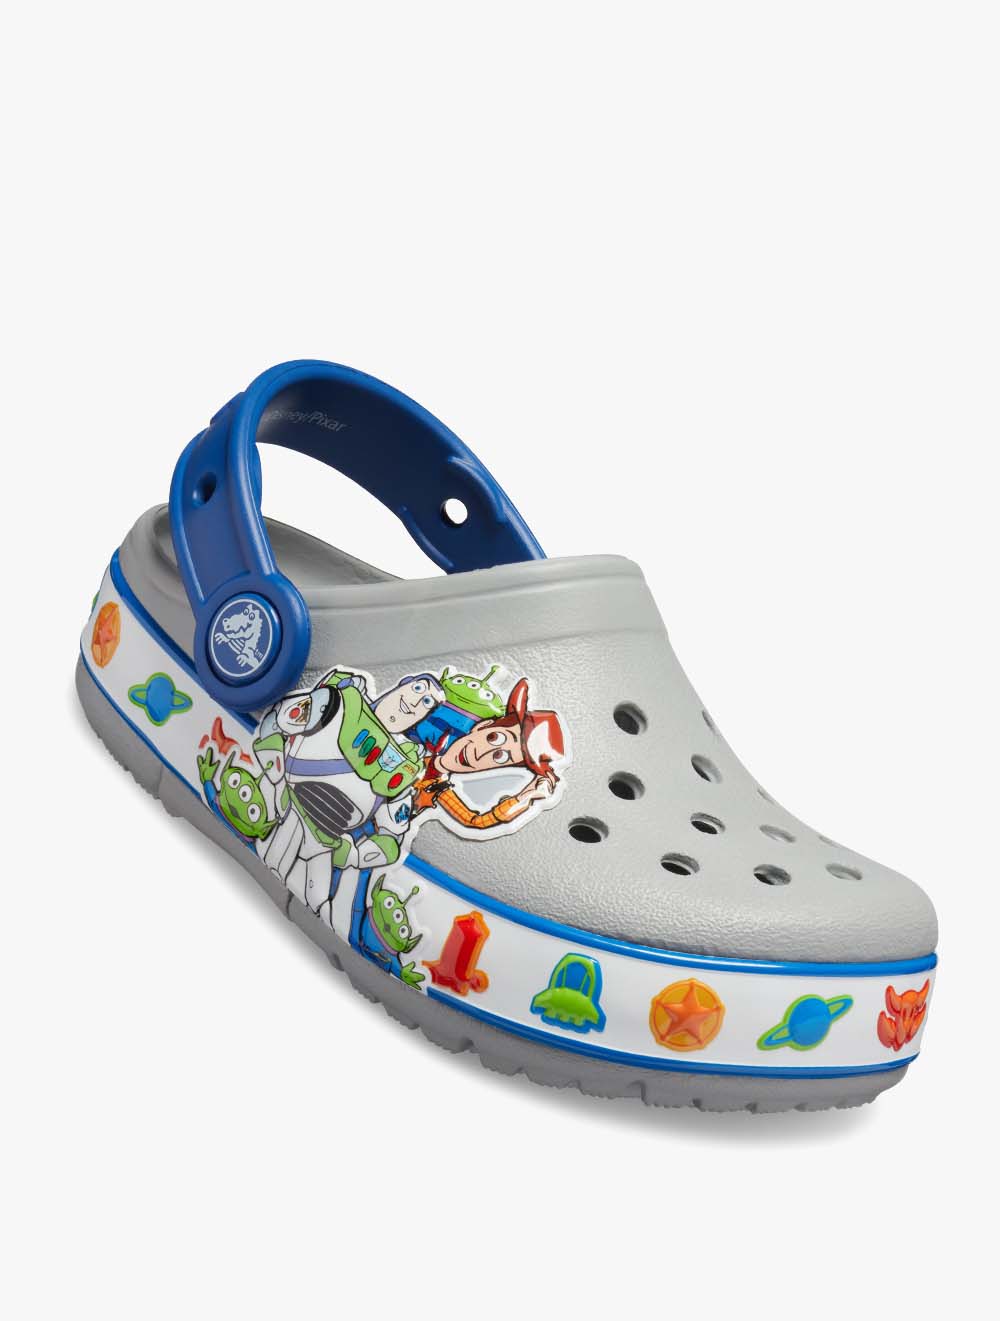 toy story crocs